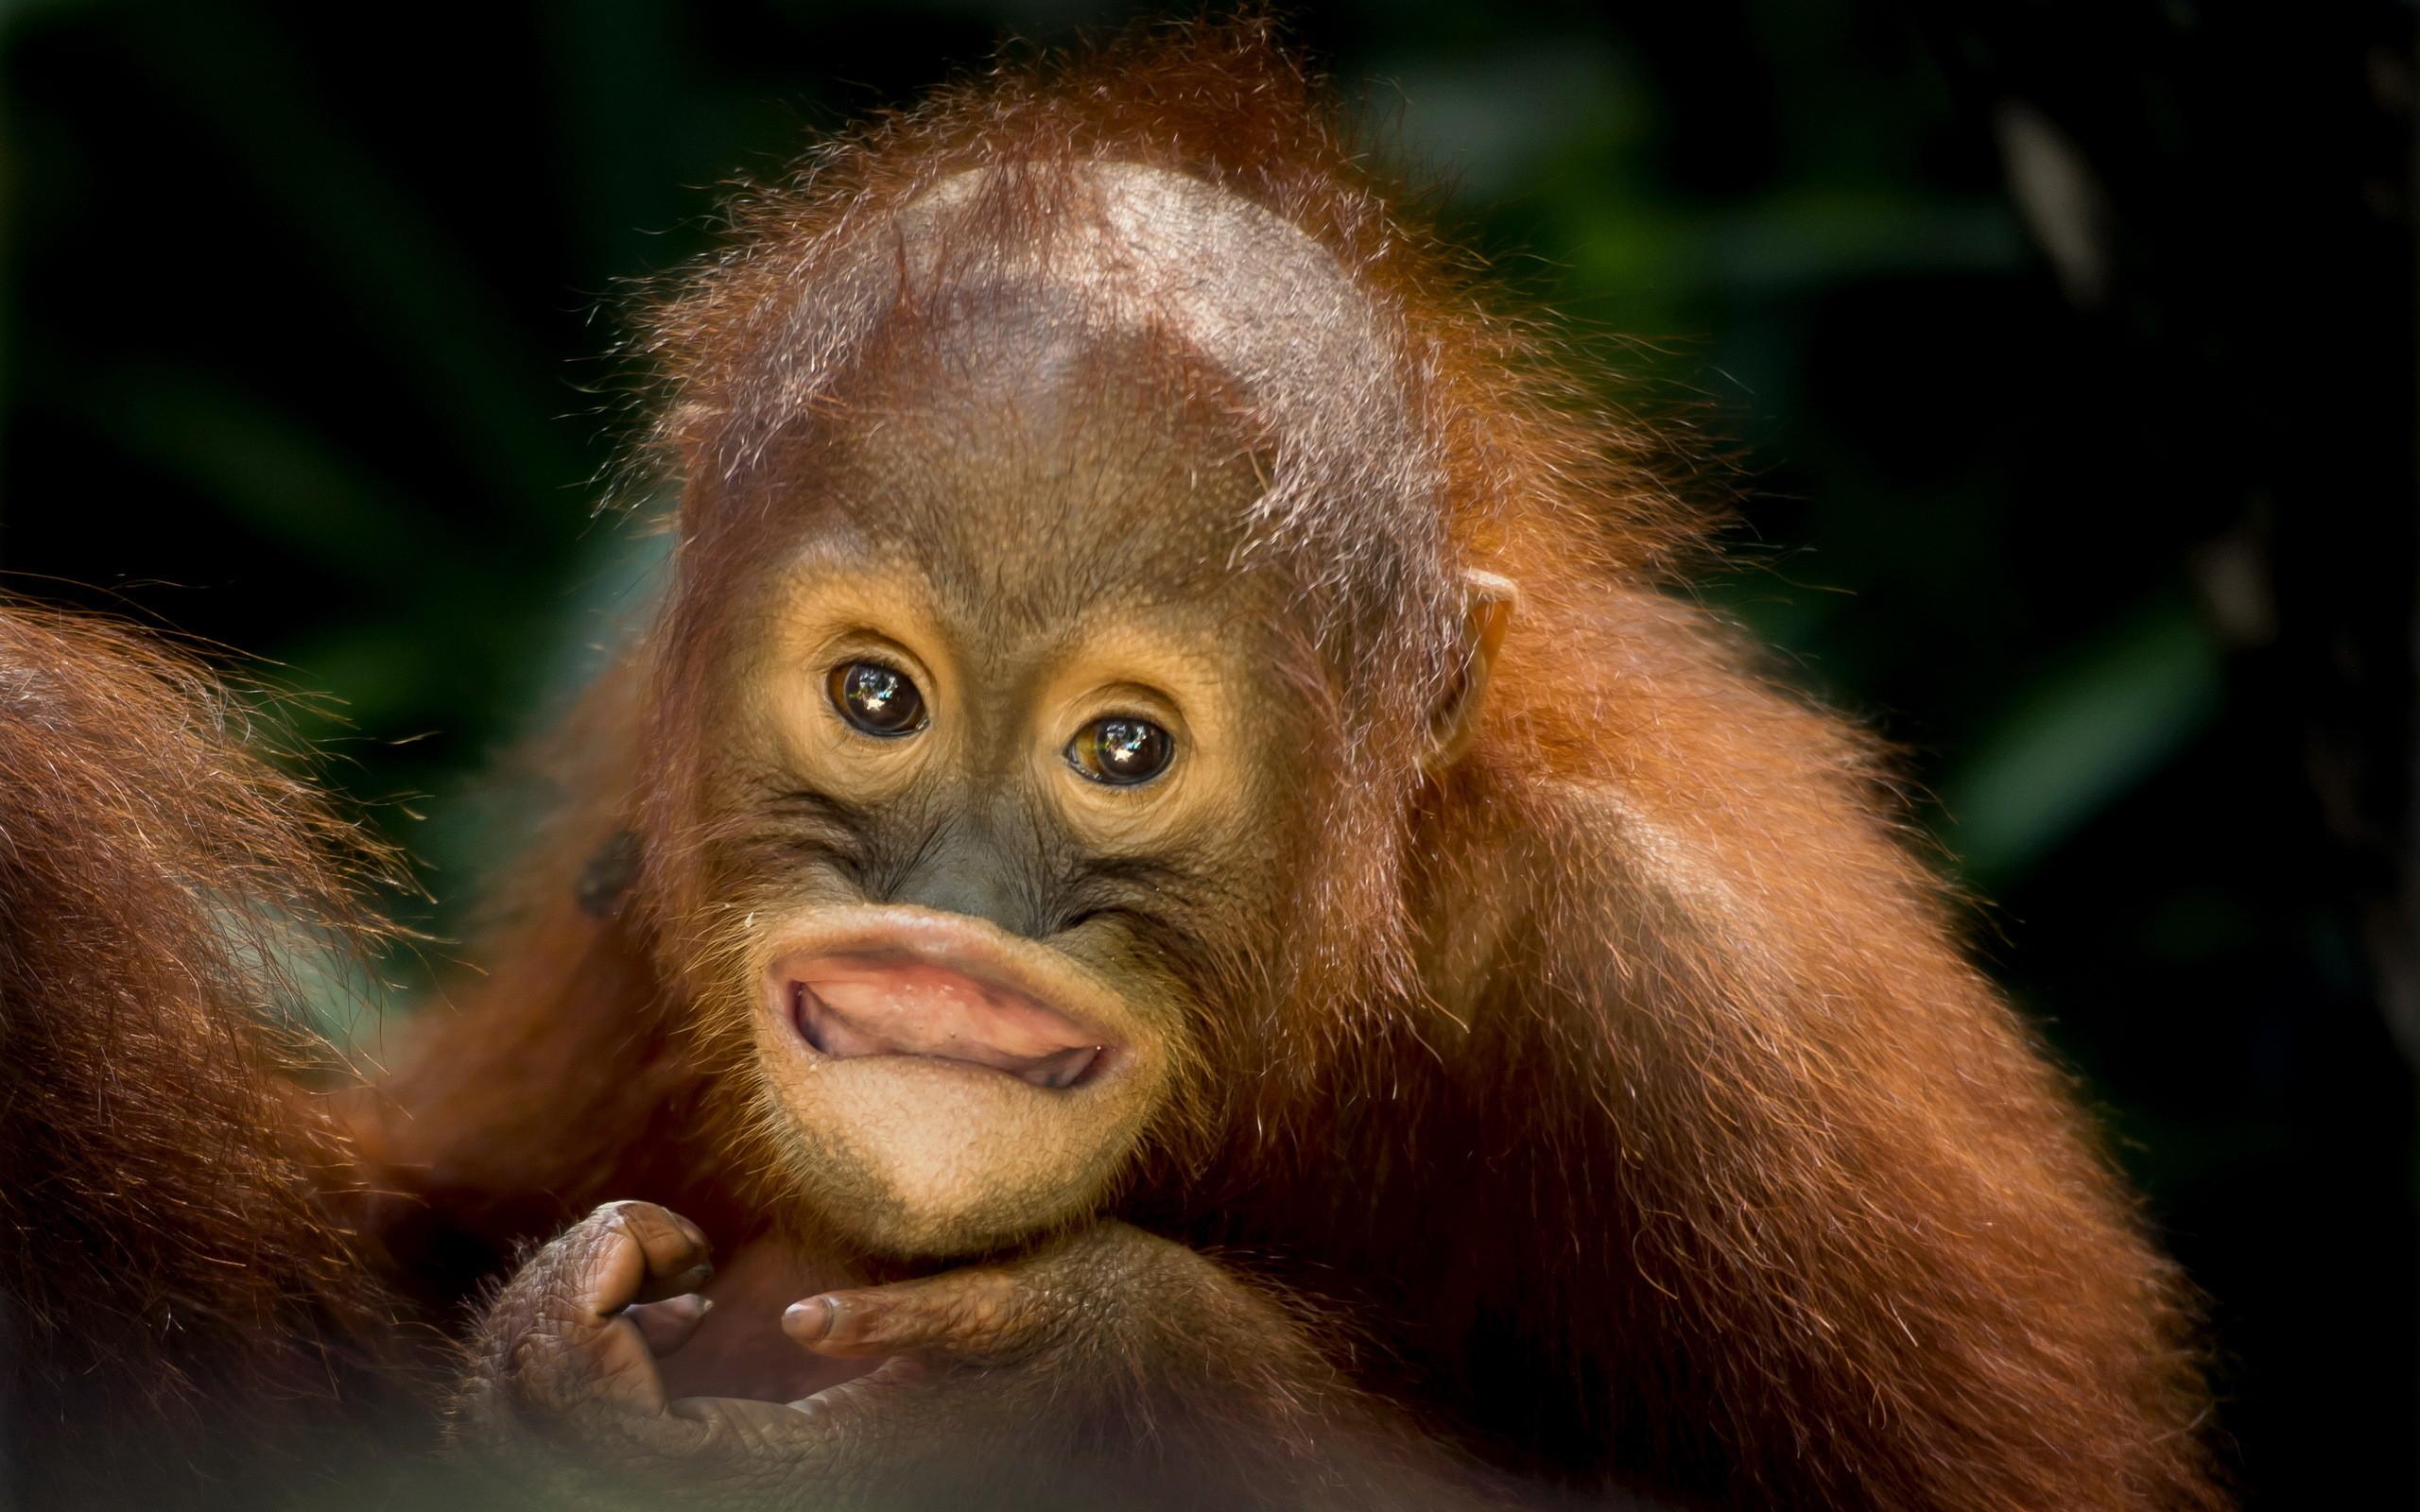 Baby Orangutan Wallpaper